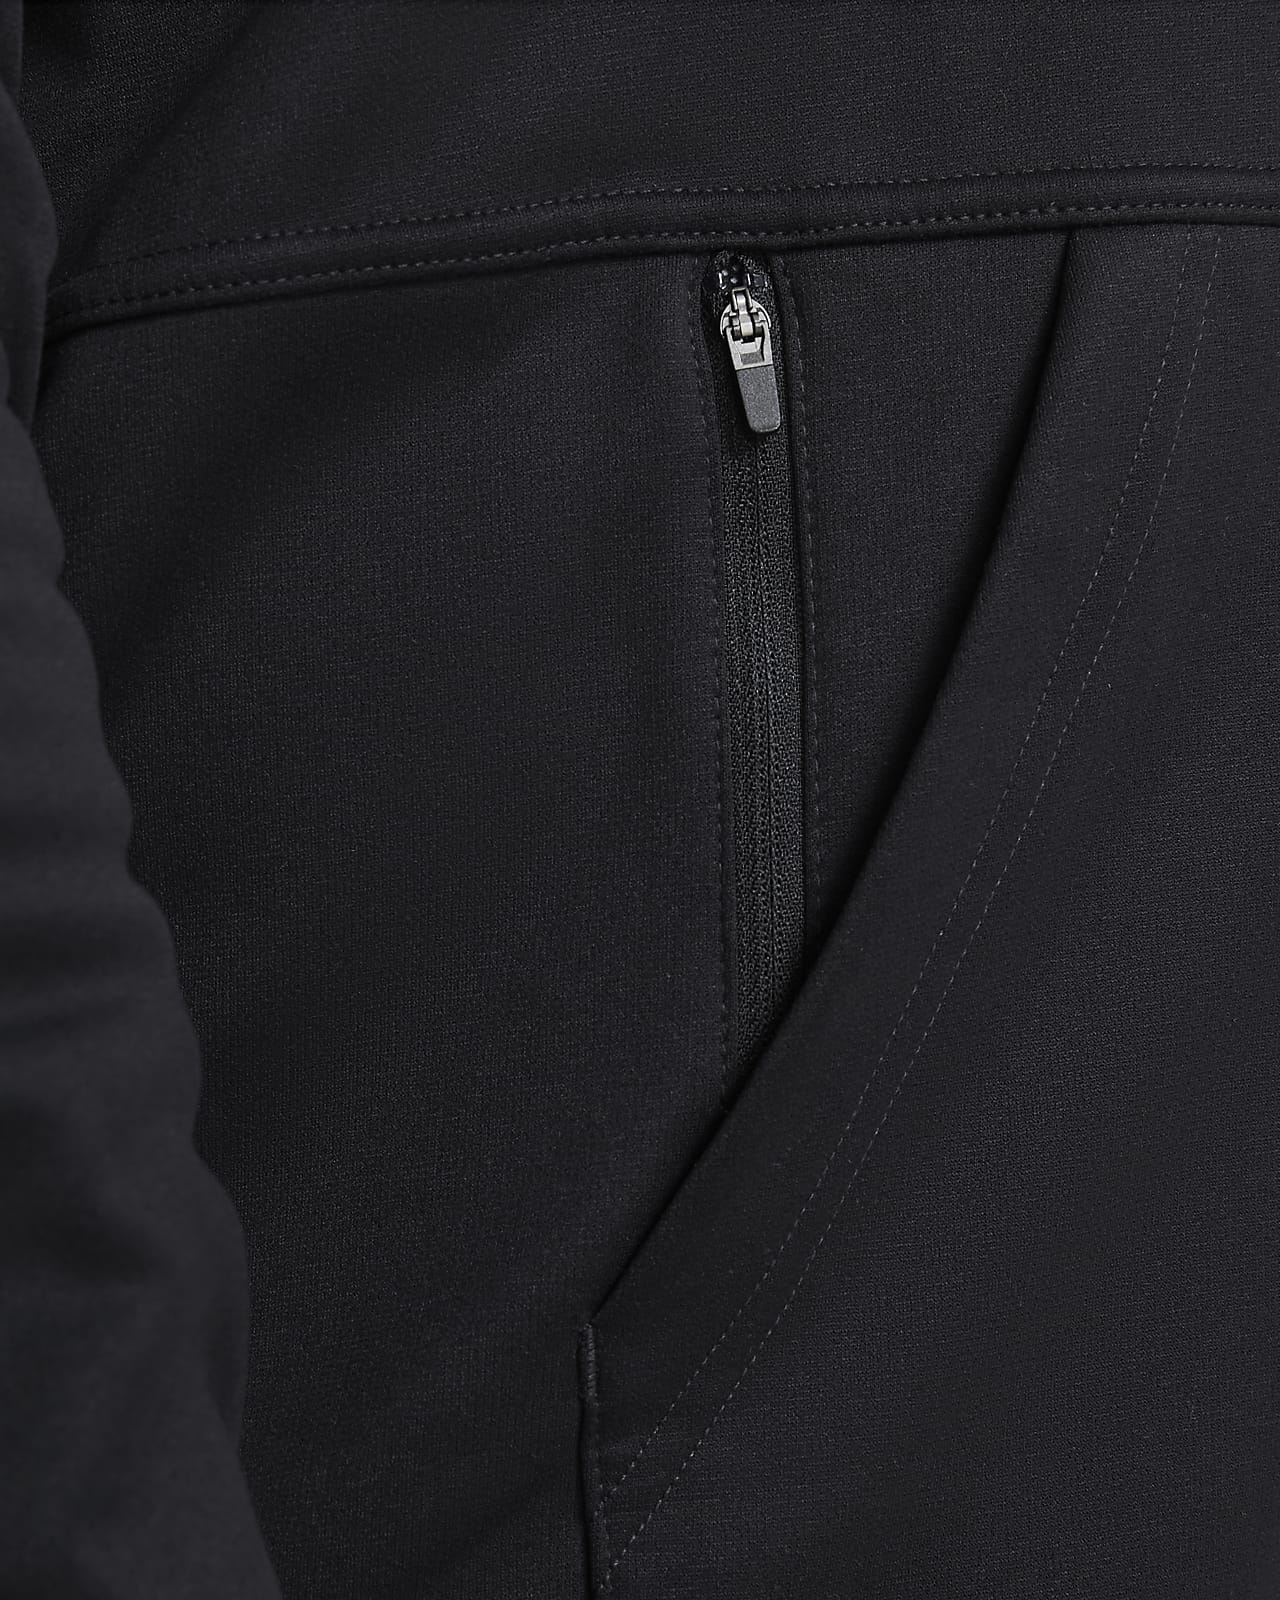 nike jacket with zipper pockets